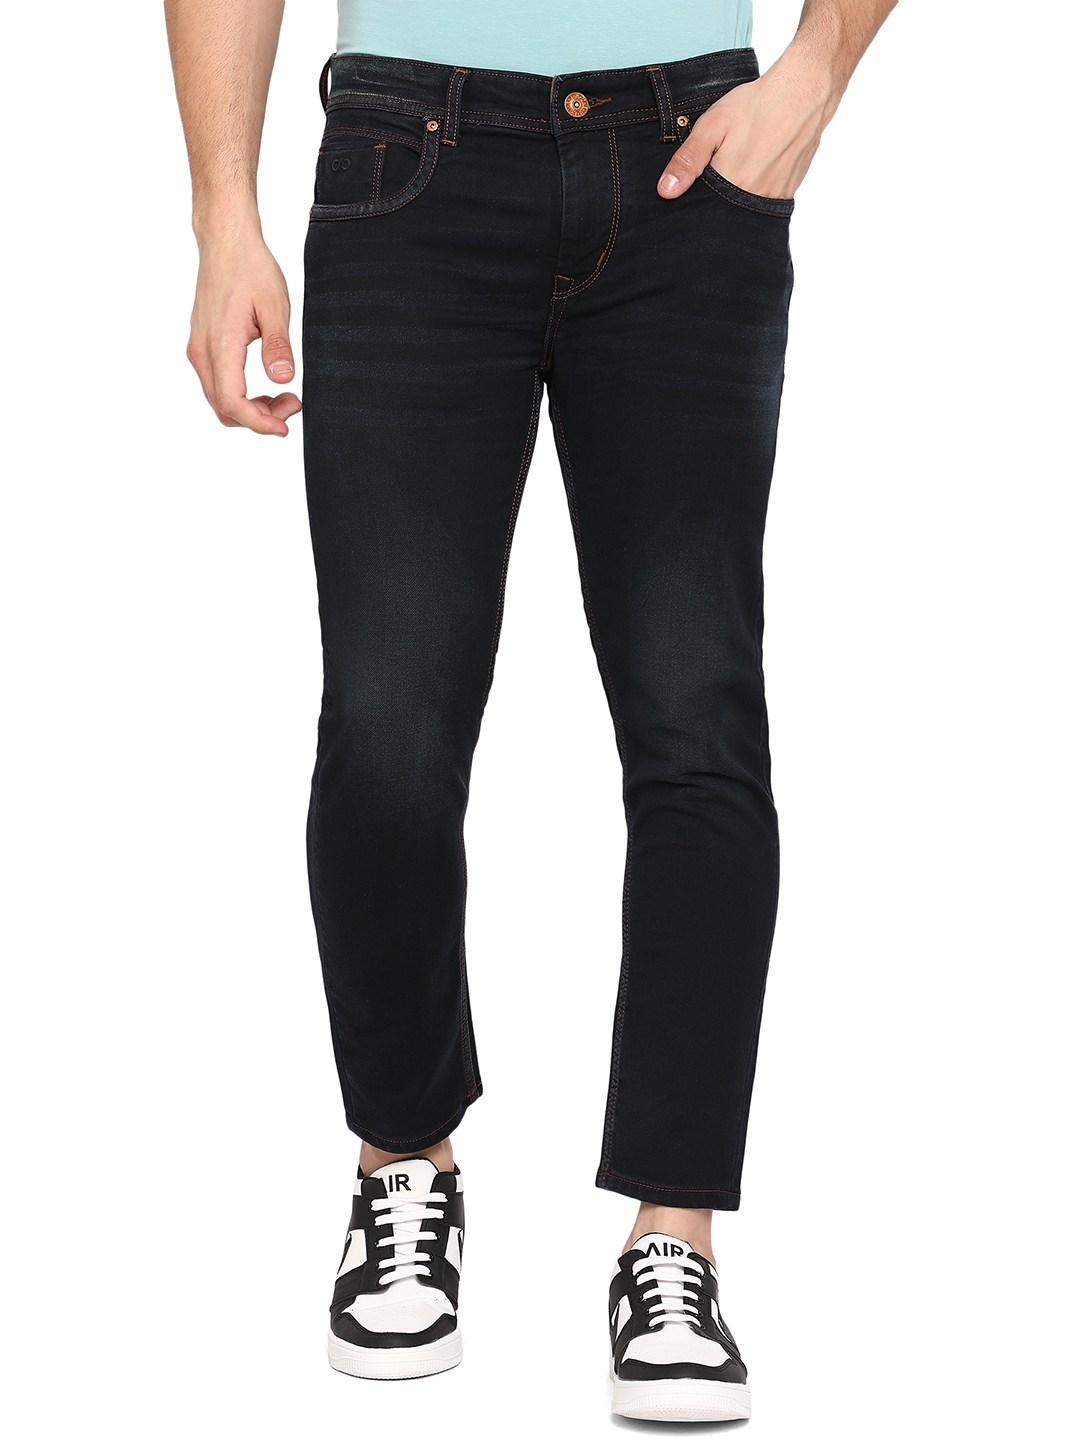 JadeBlue Sport | Black Solid Jeans (JBD-RD-007 EBONY GREY)